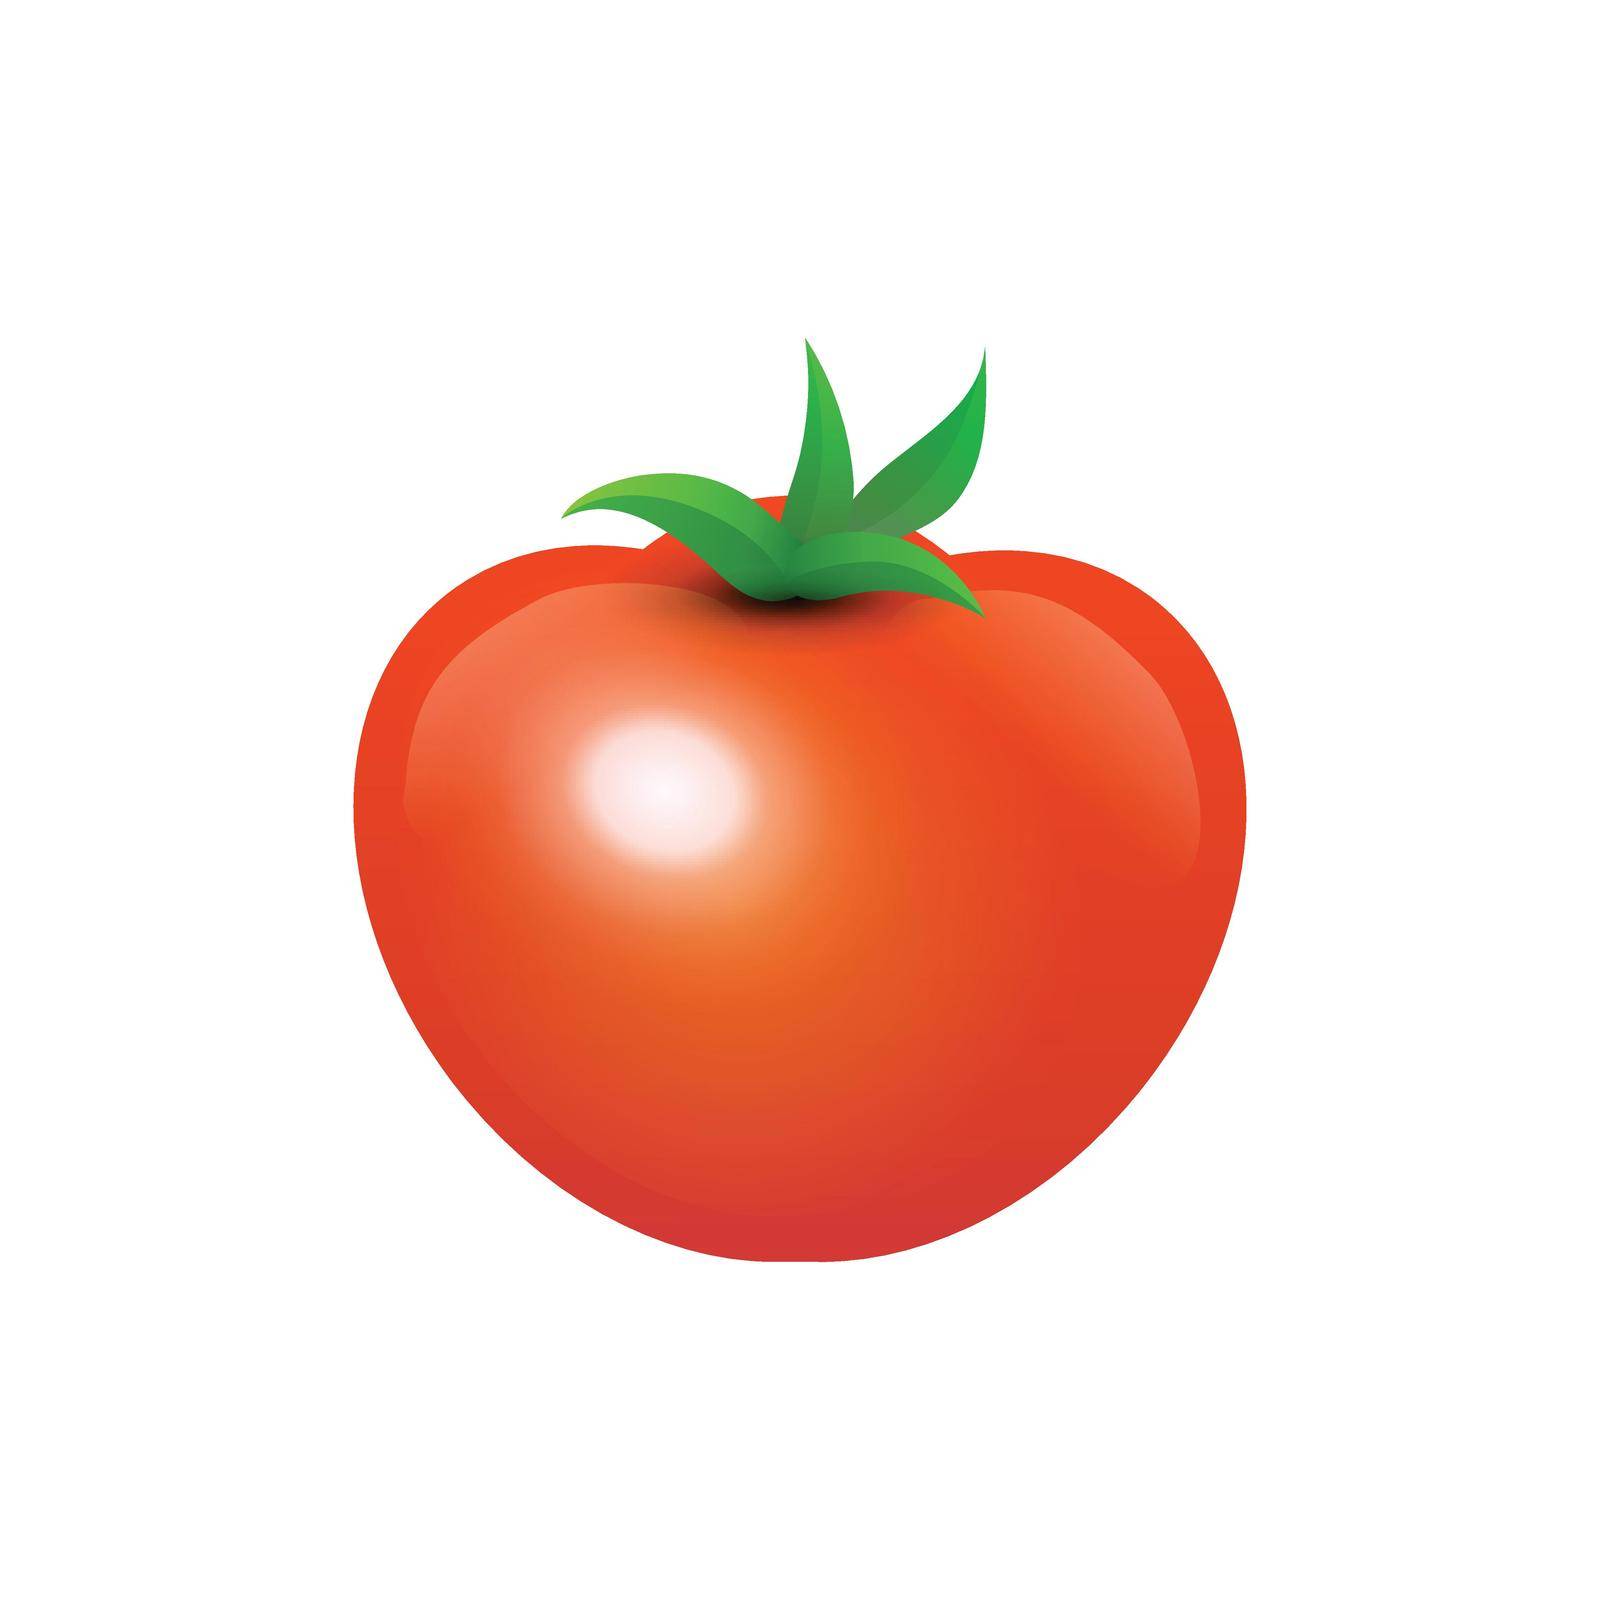 Tasty Juicy Tomato - Vector Illustration isolated on white background.